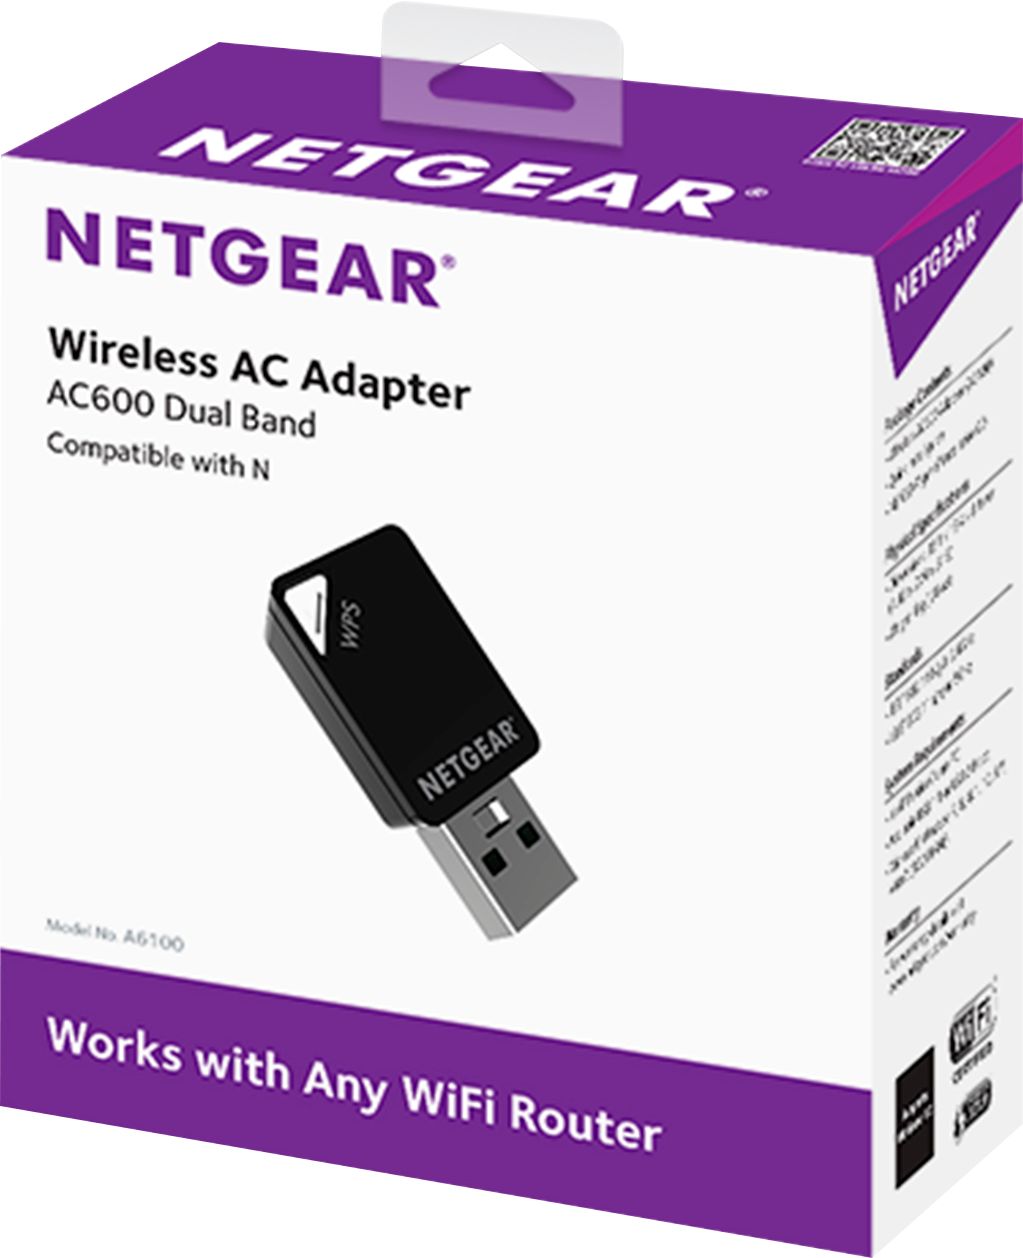 netgear wireless ac adapter ac600 download